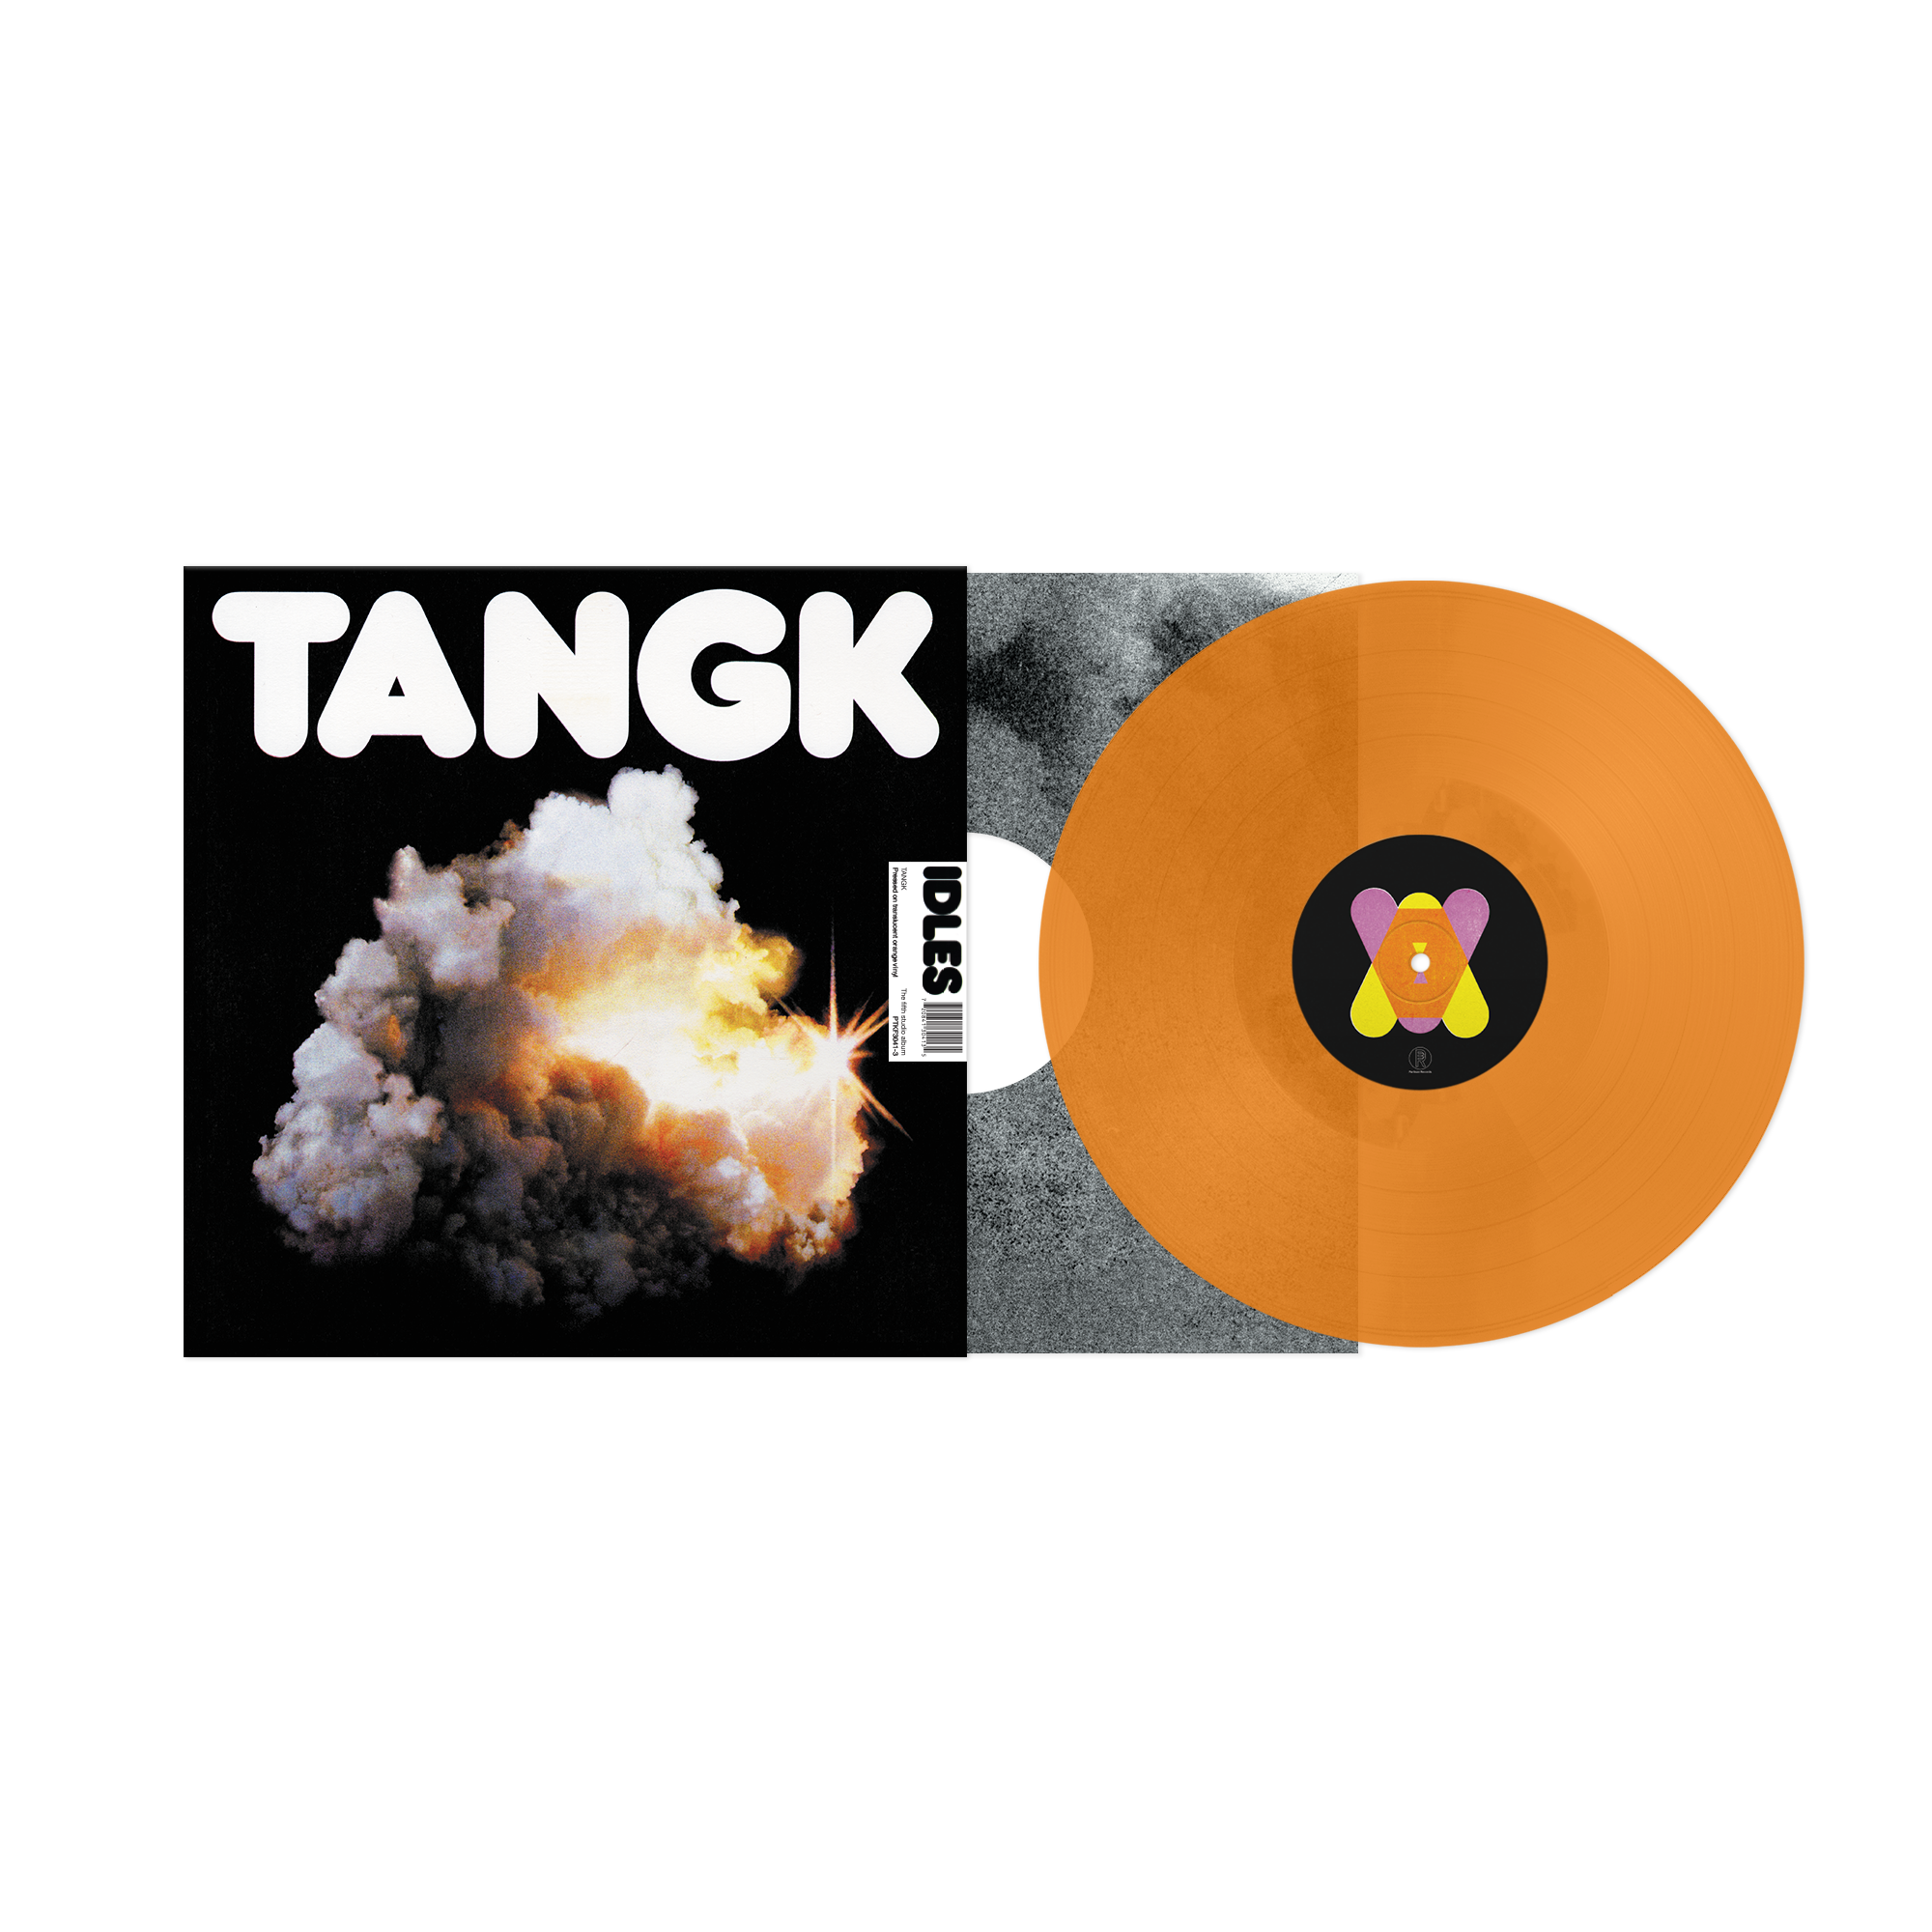 TANGK Vinyl + T-shirt